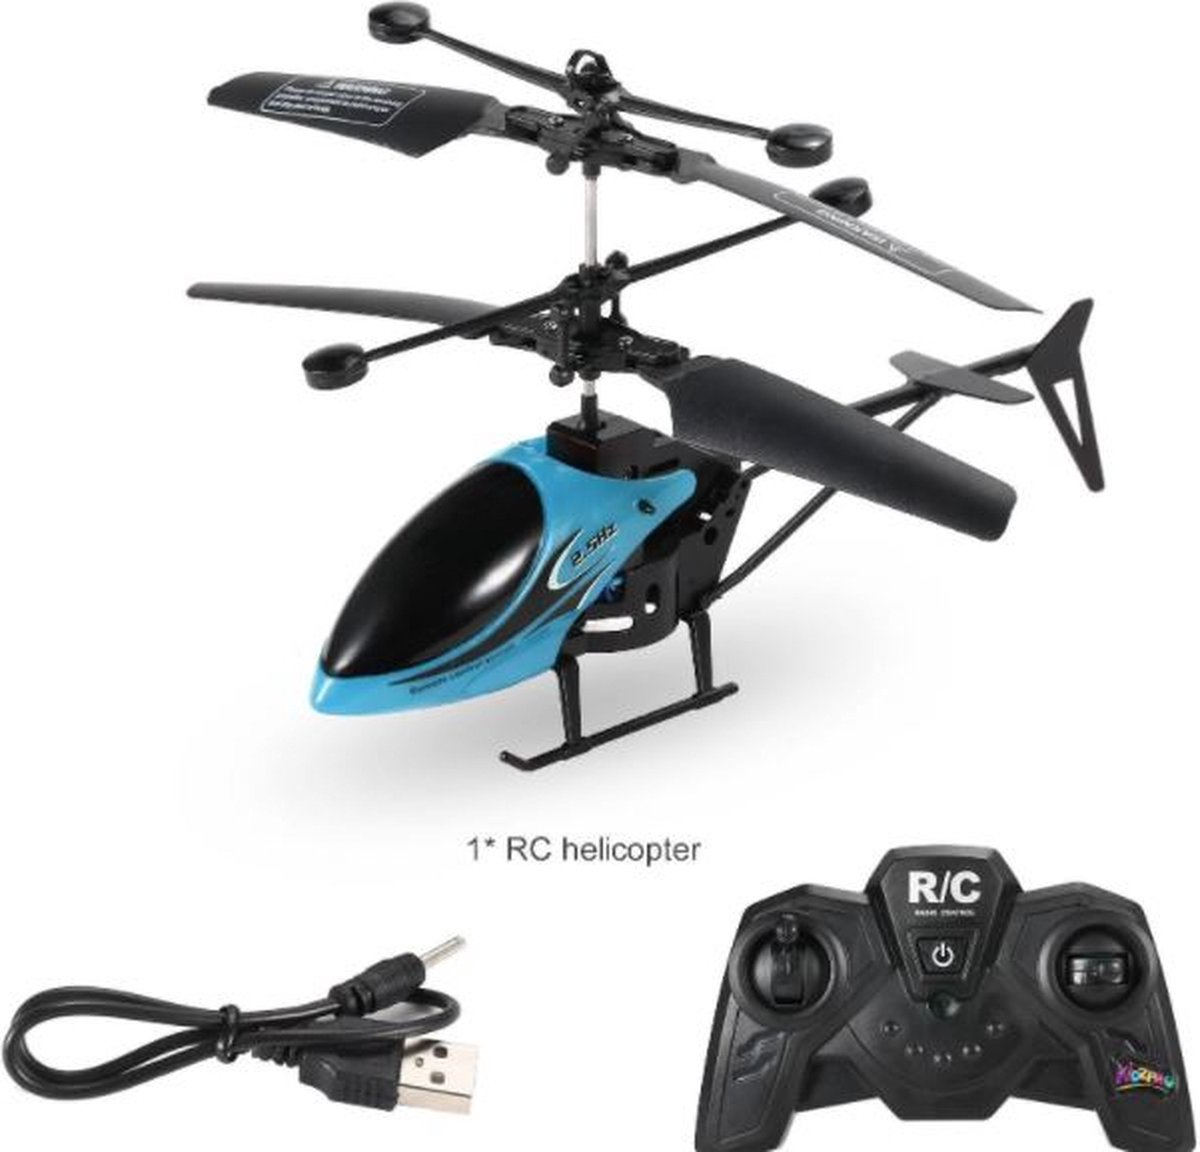 Helikopter SKY Dual Brushless Motors - RC - USB